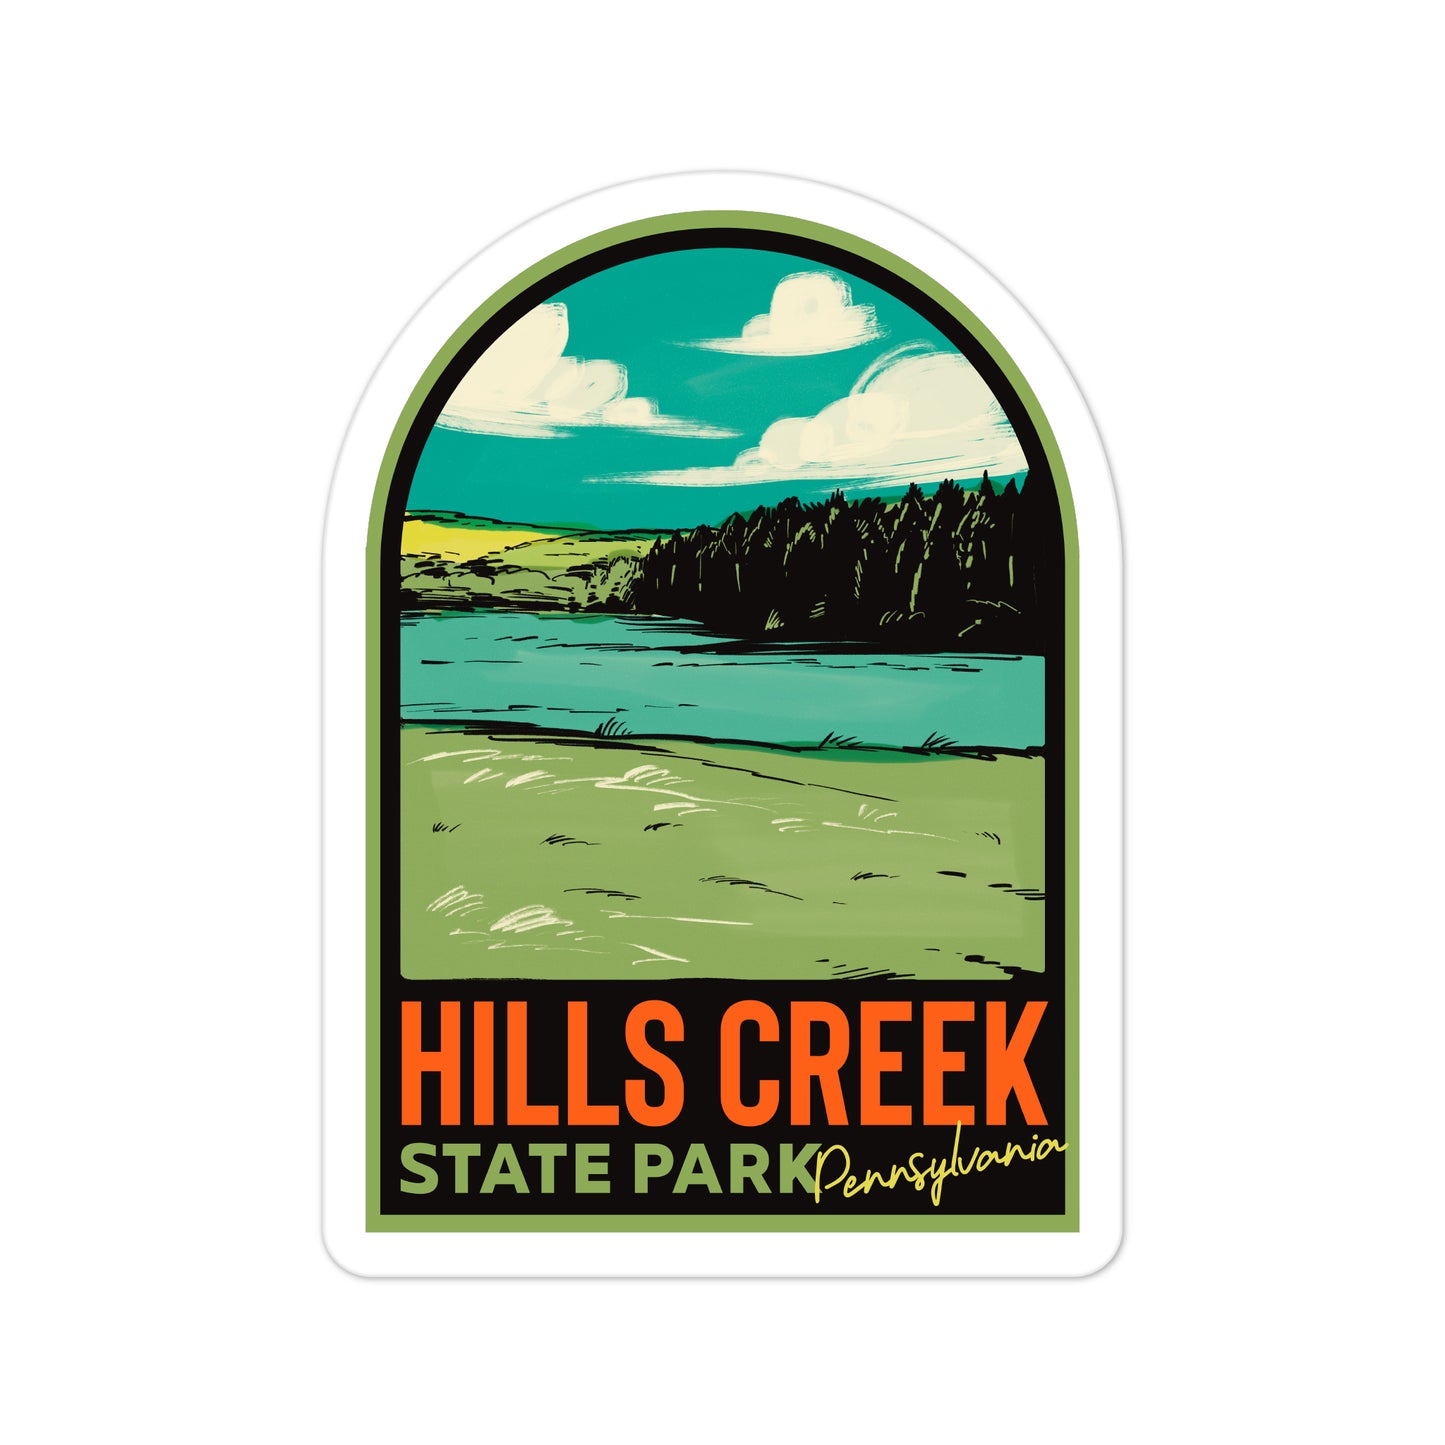 A sticker of Hills Creek State Park